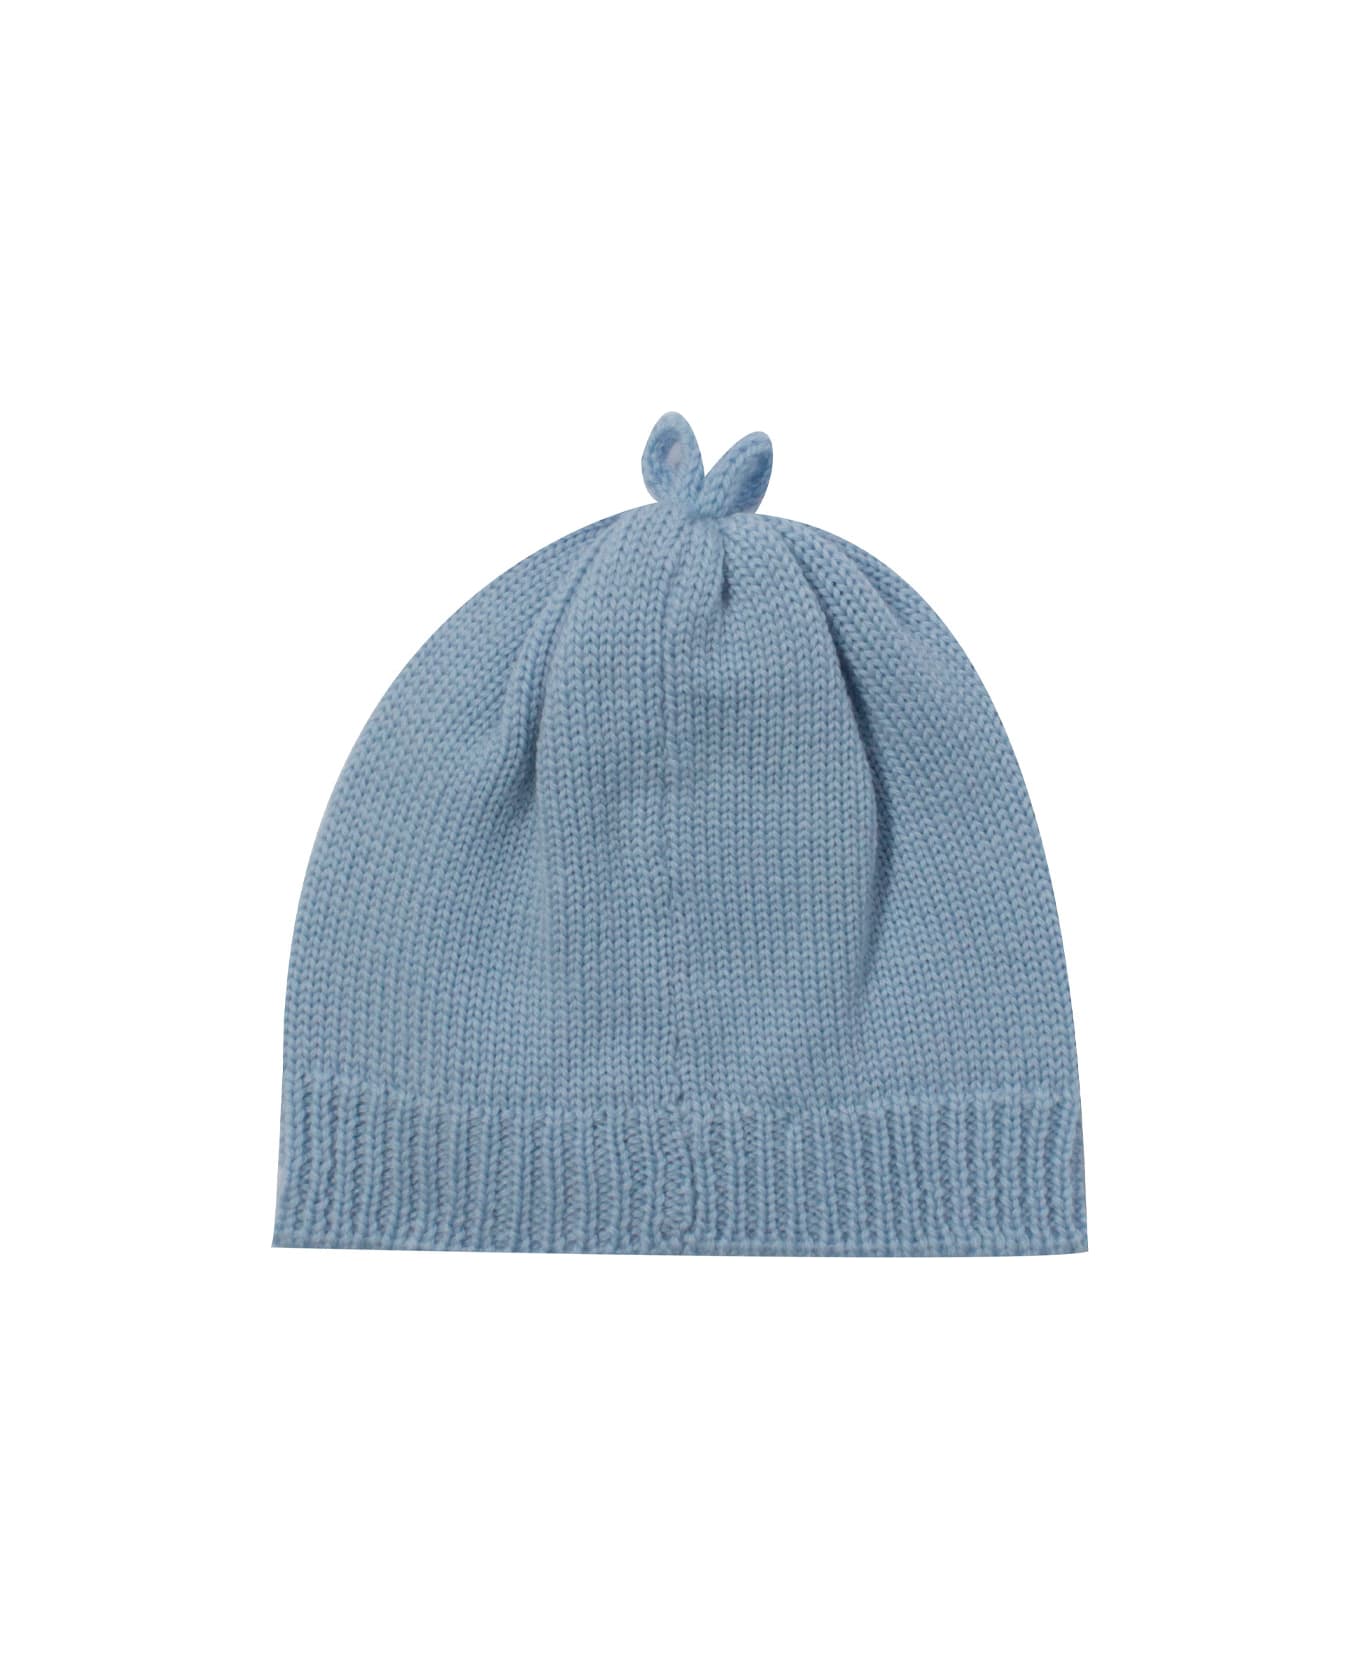 Piccola Giuggiola Wool Knit Hat - Light blue